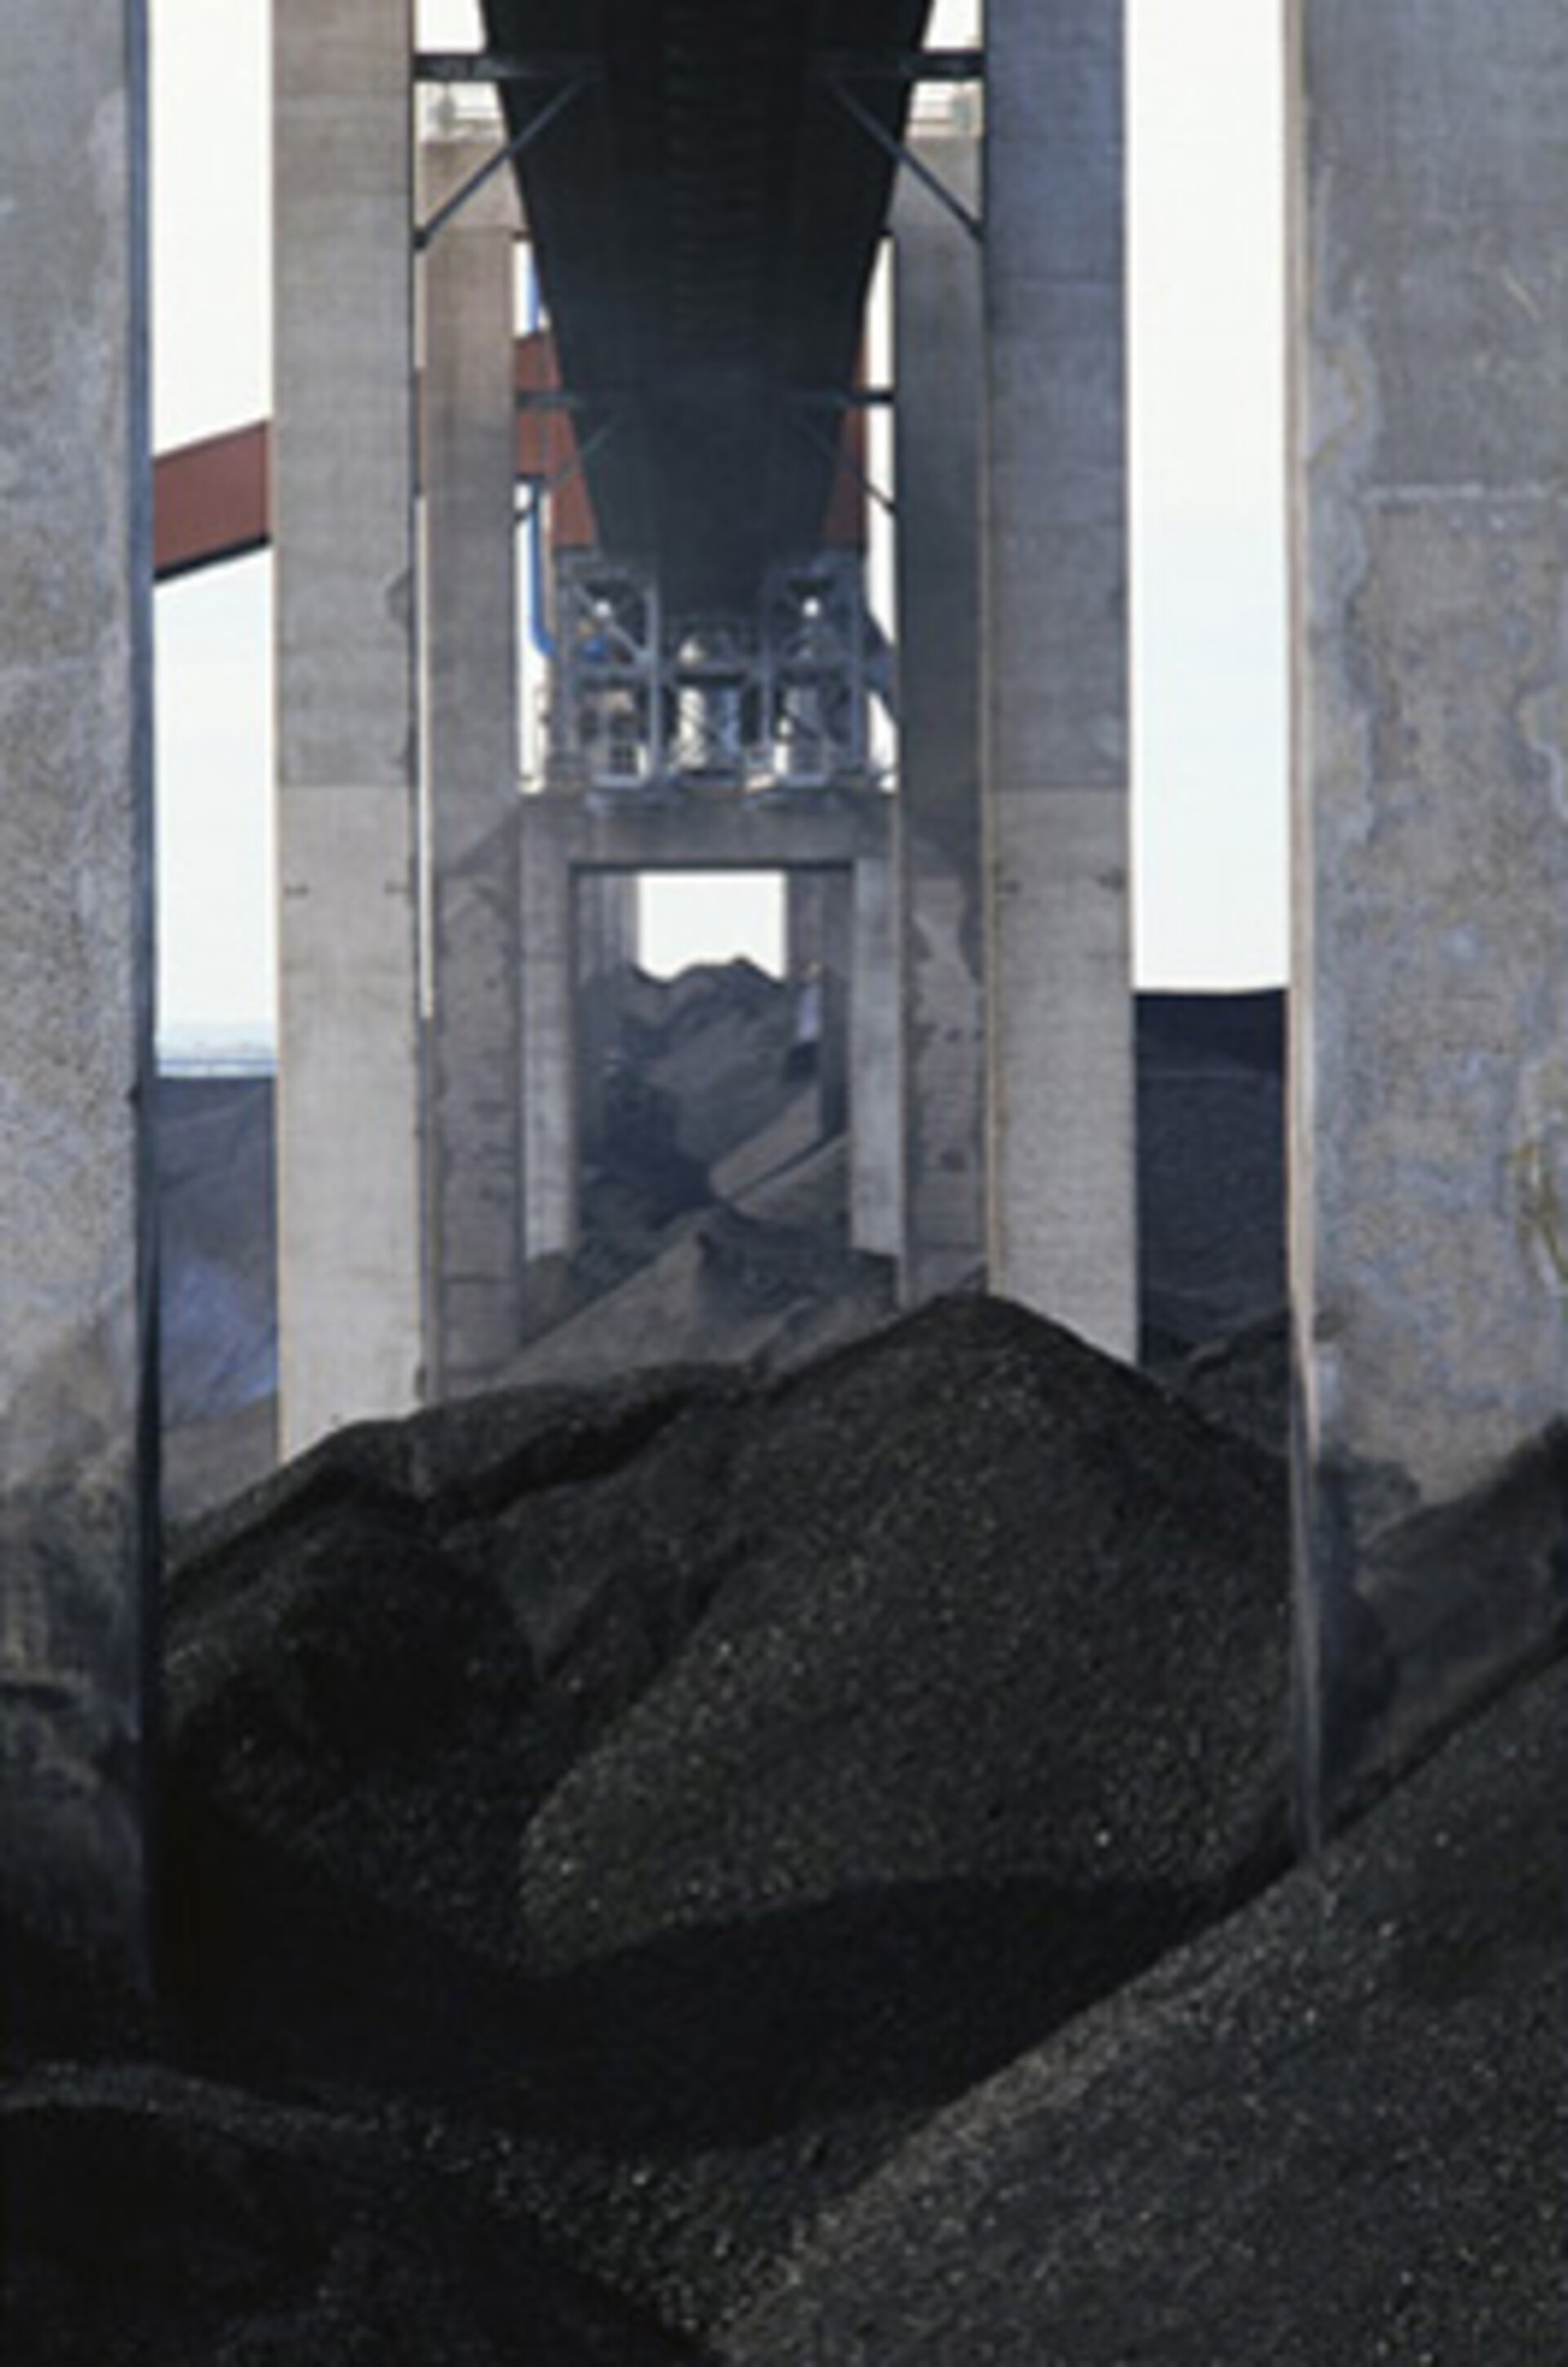 Mining conveyor belt